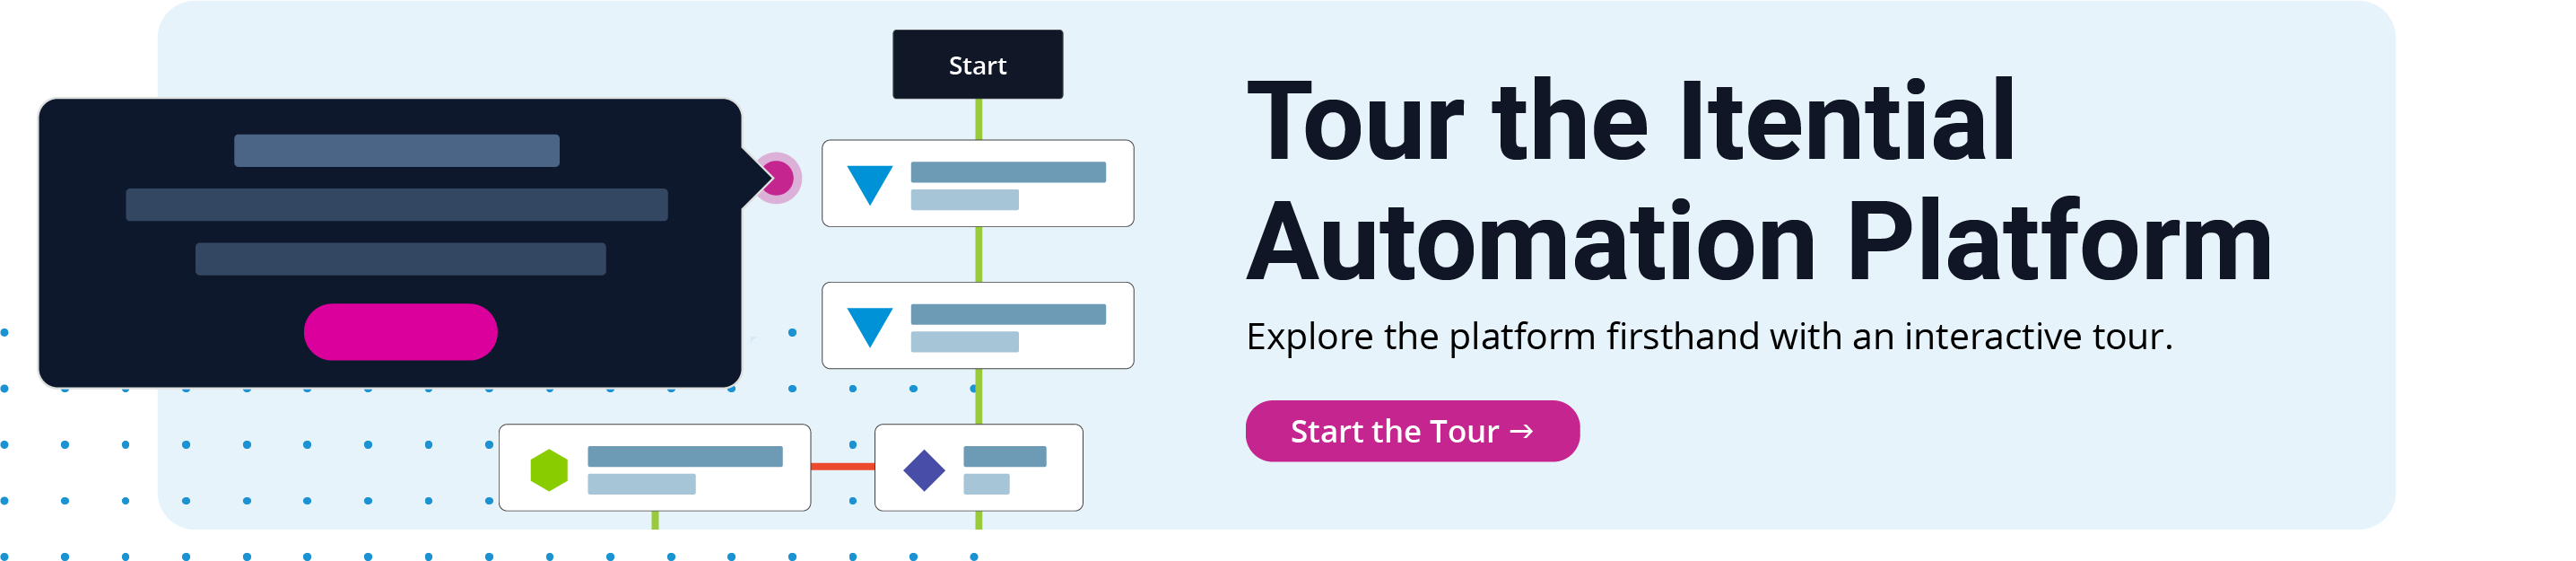 Tour the Itential Automation Platform